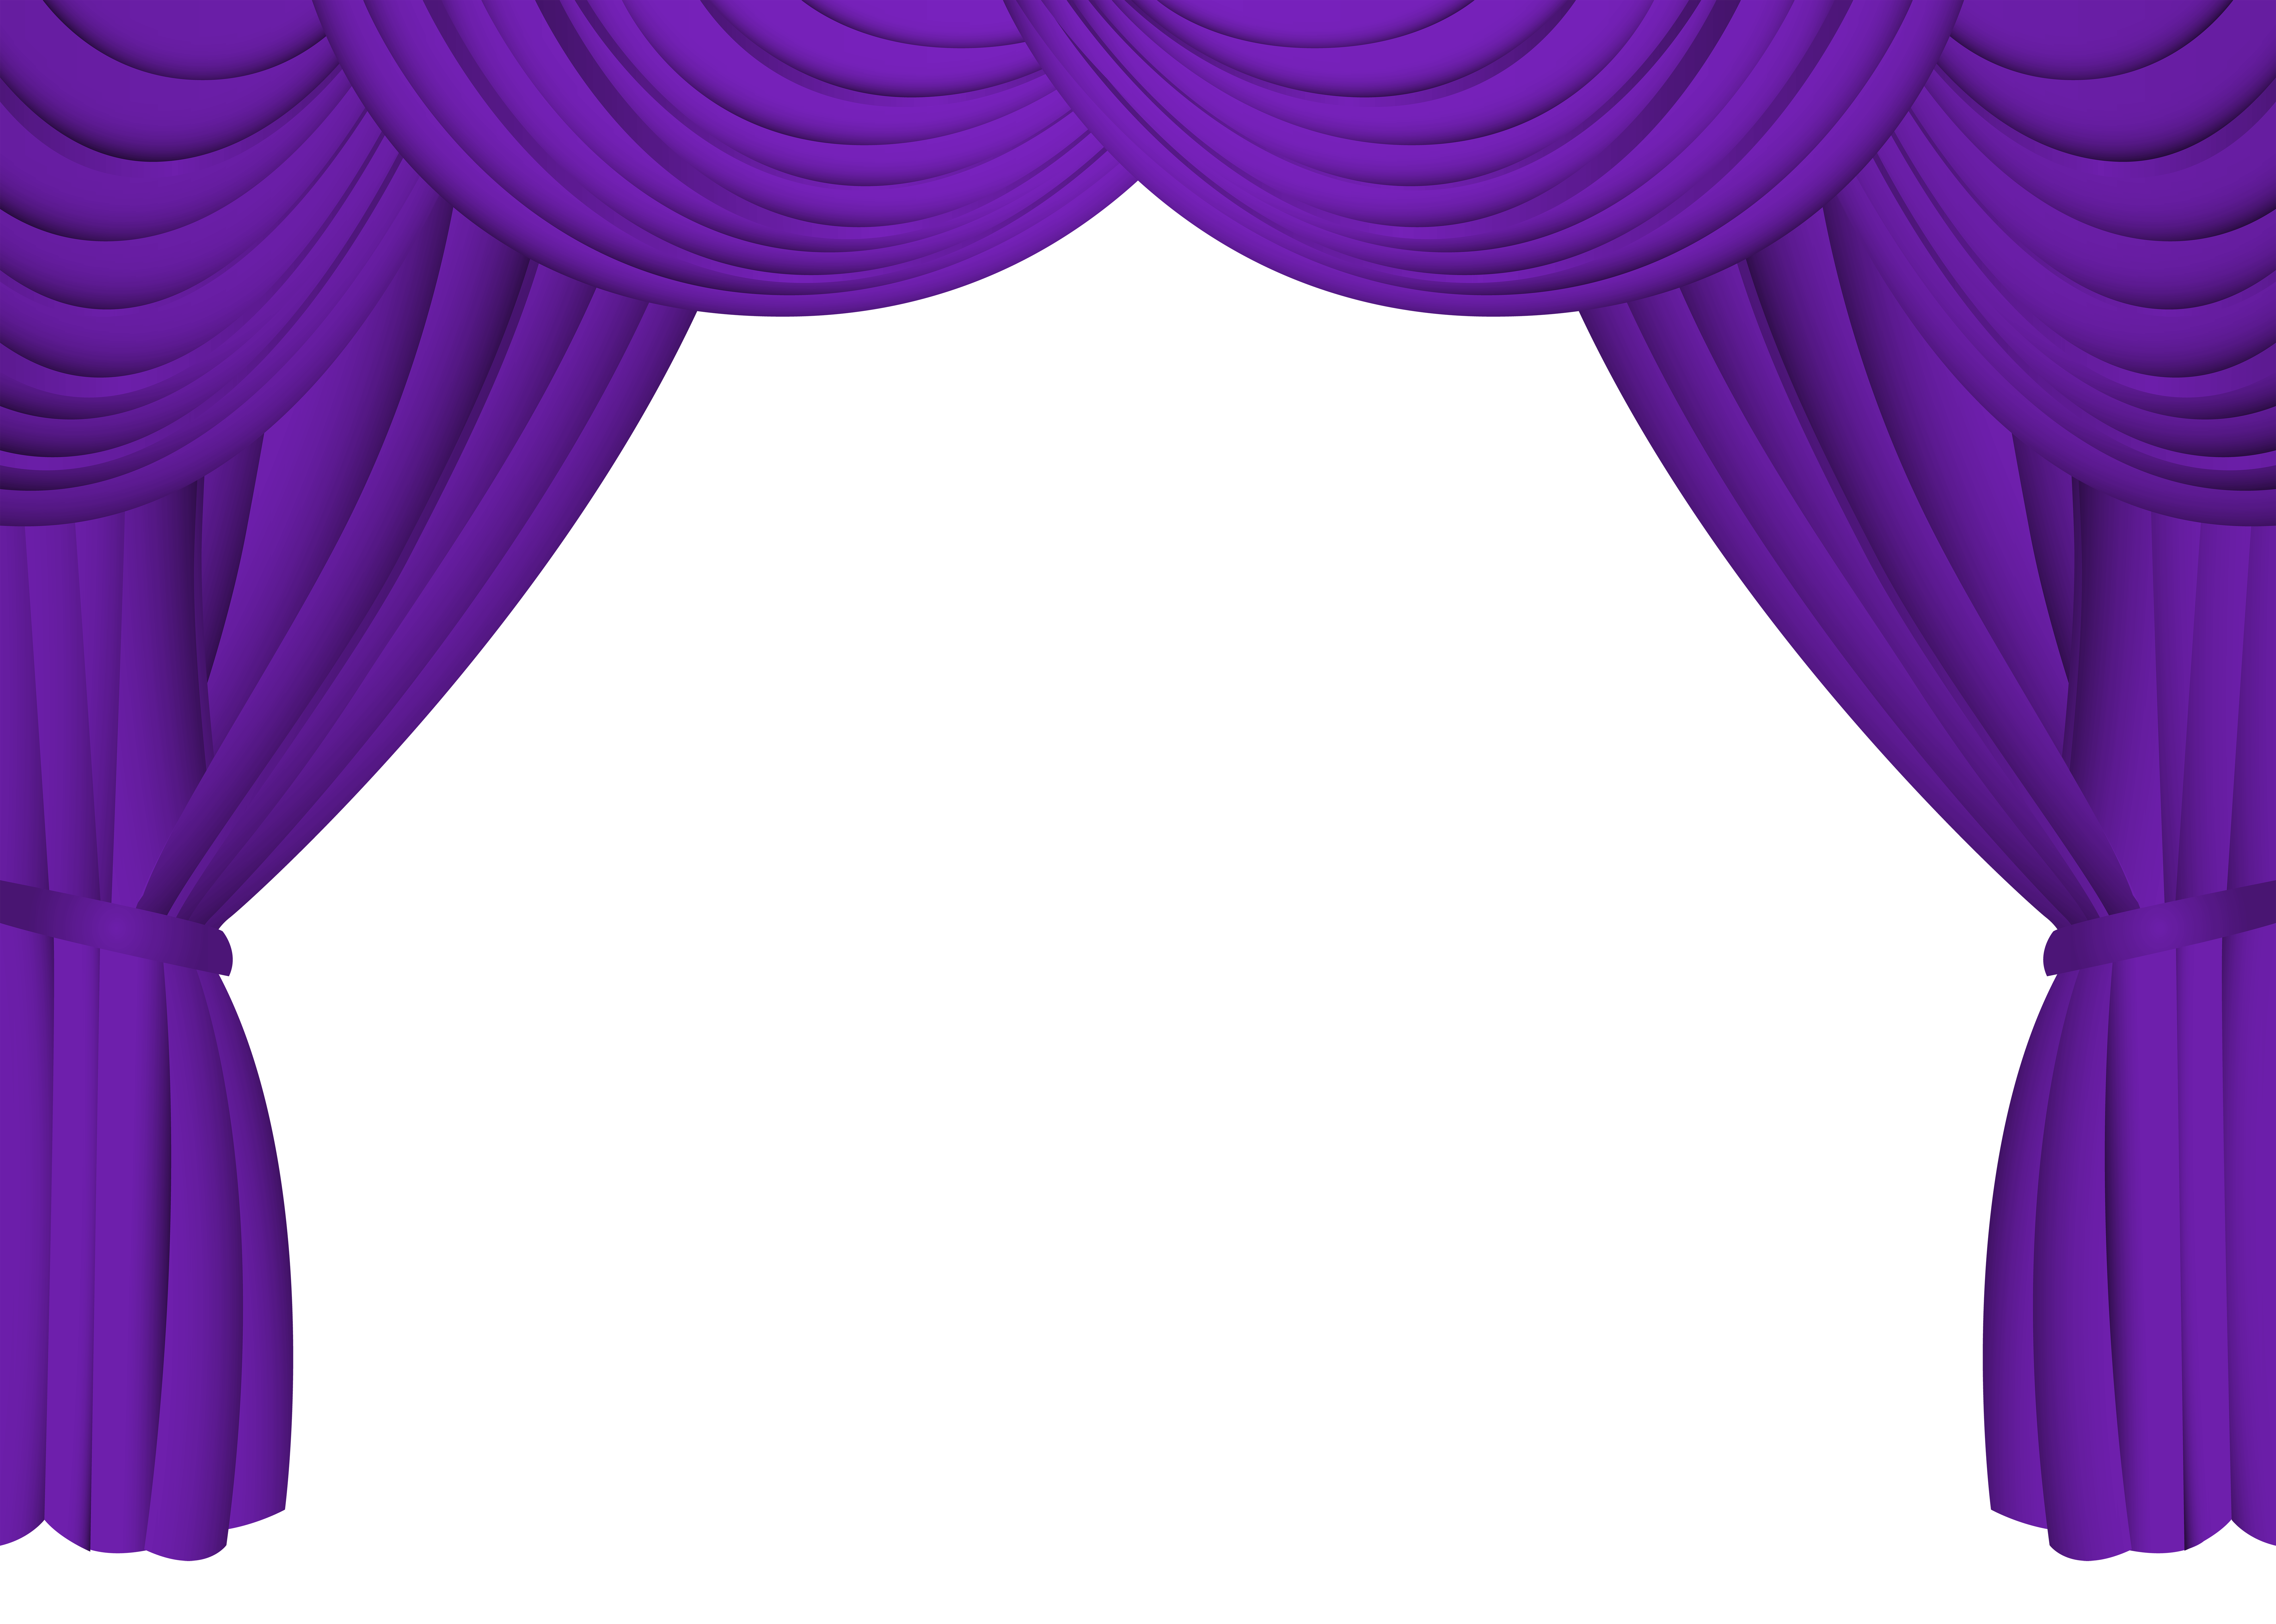 purple theater curtains